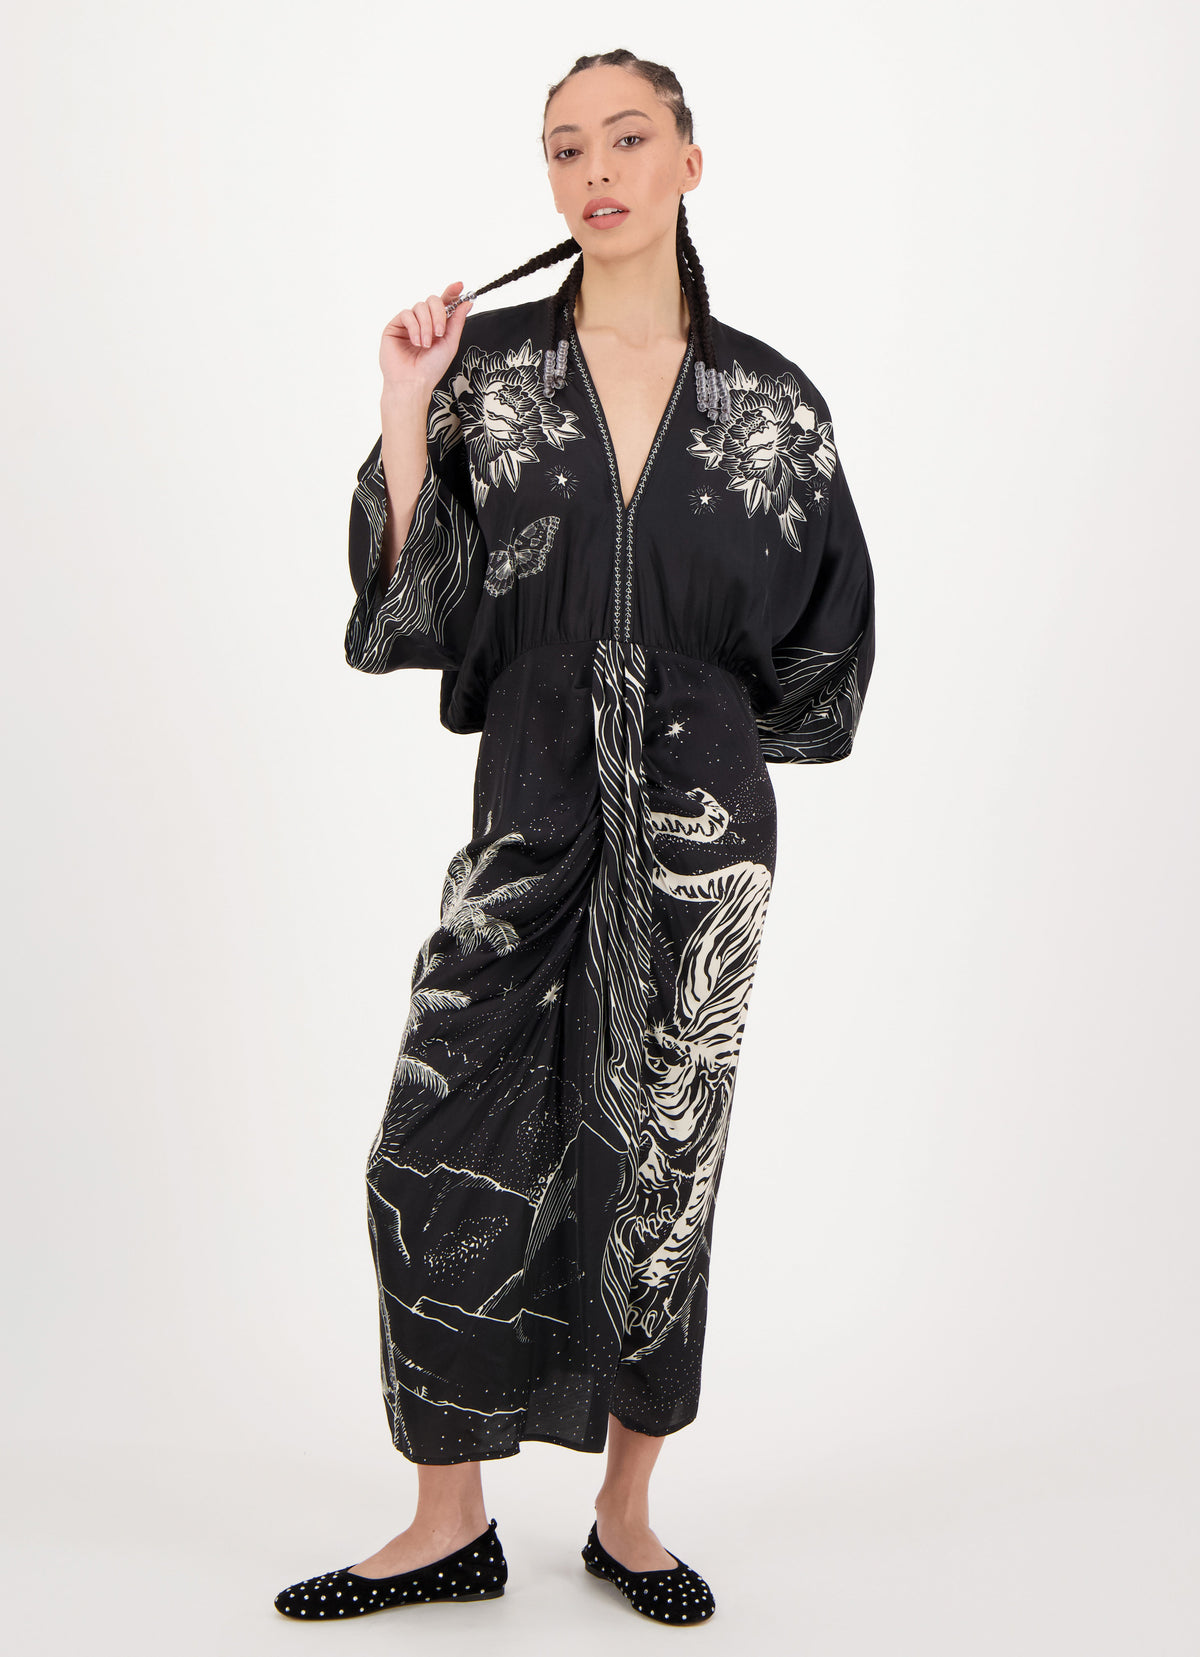 Black printed midi dress with kimono style sleeves and a v neck